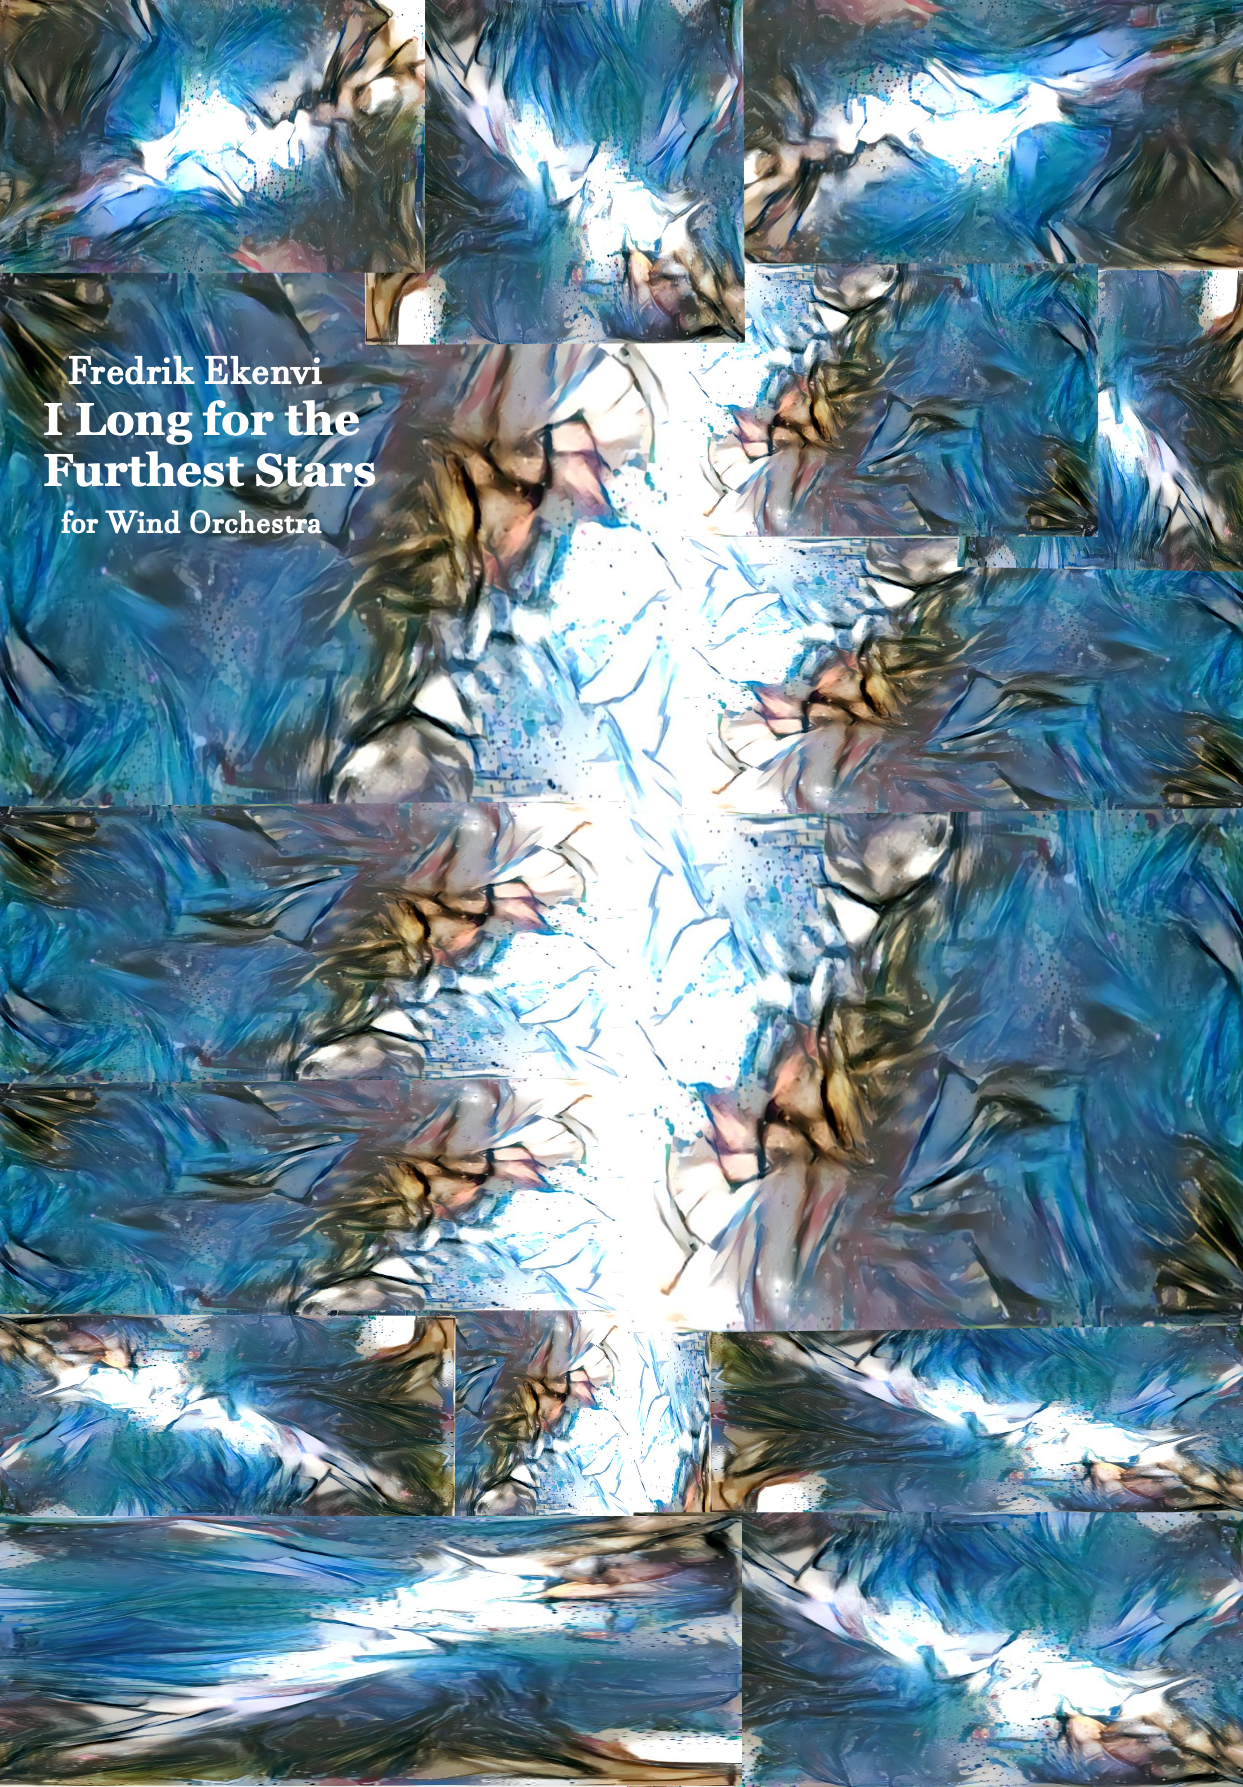 I Long For The Furthest Stars by Fredrik Ekenvi